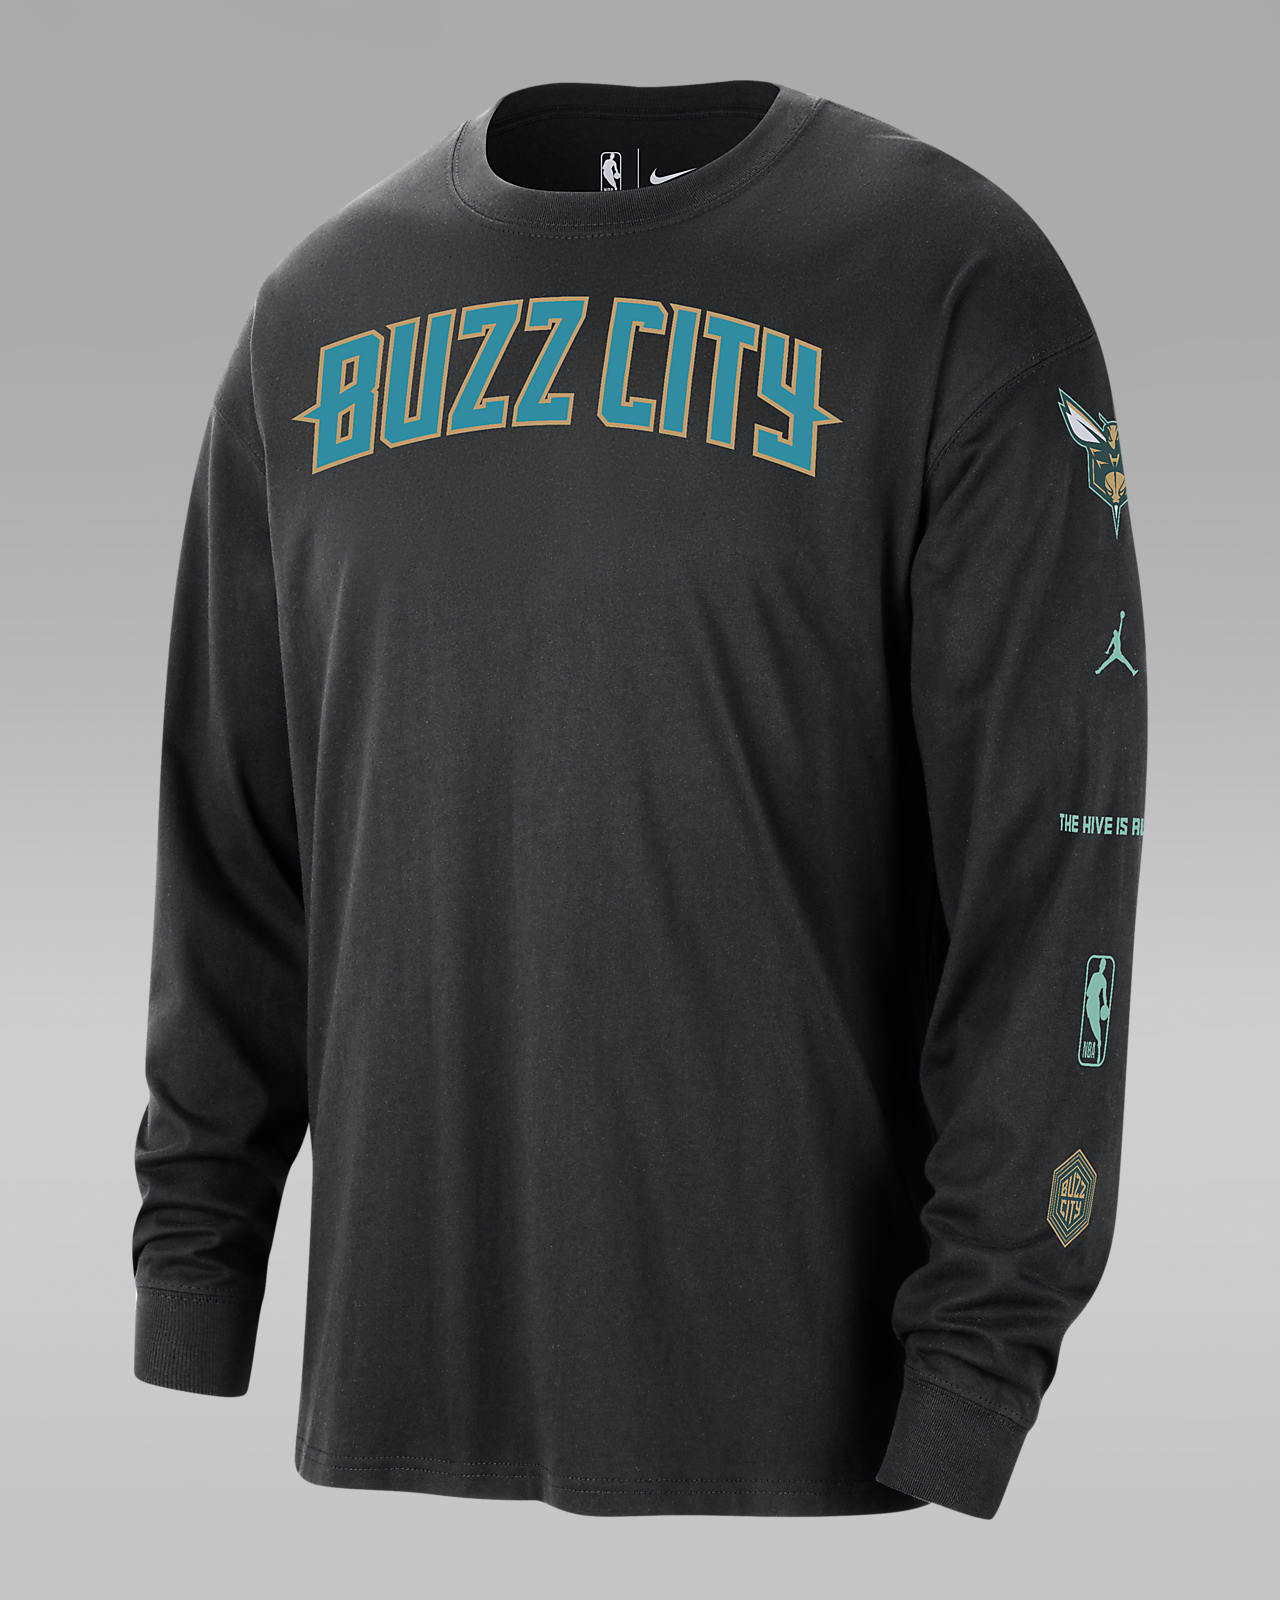 Charlotte Hornets Buzz City - Comprar em Shop Online